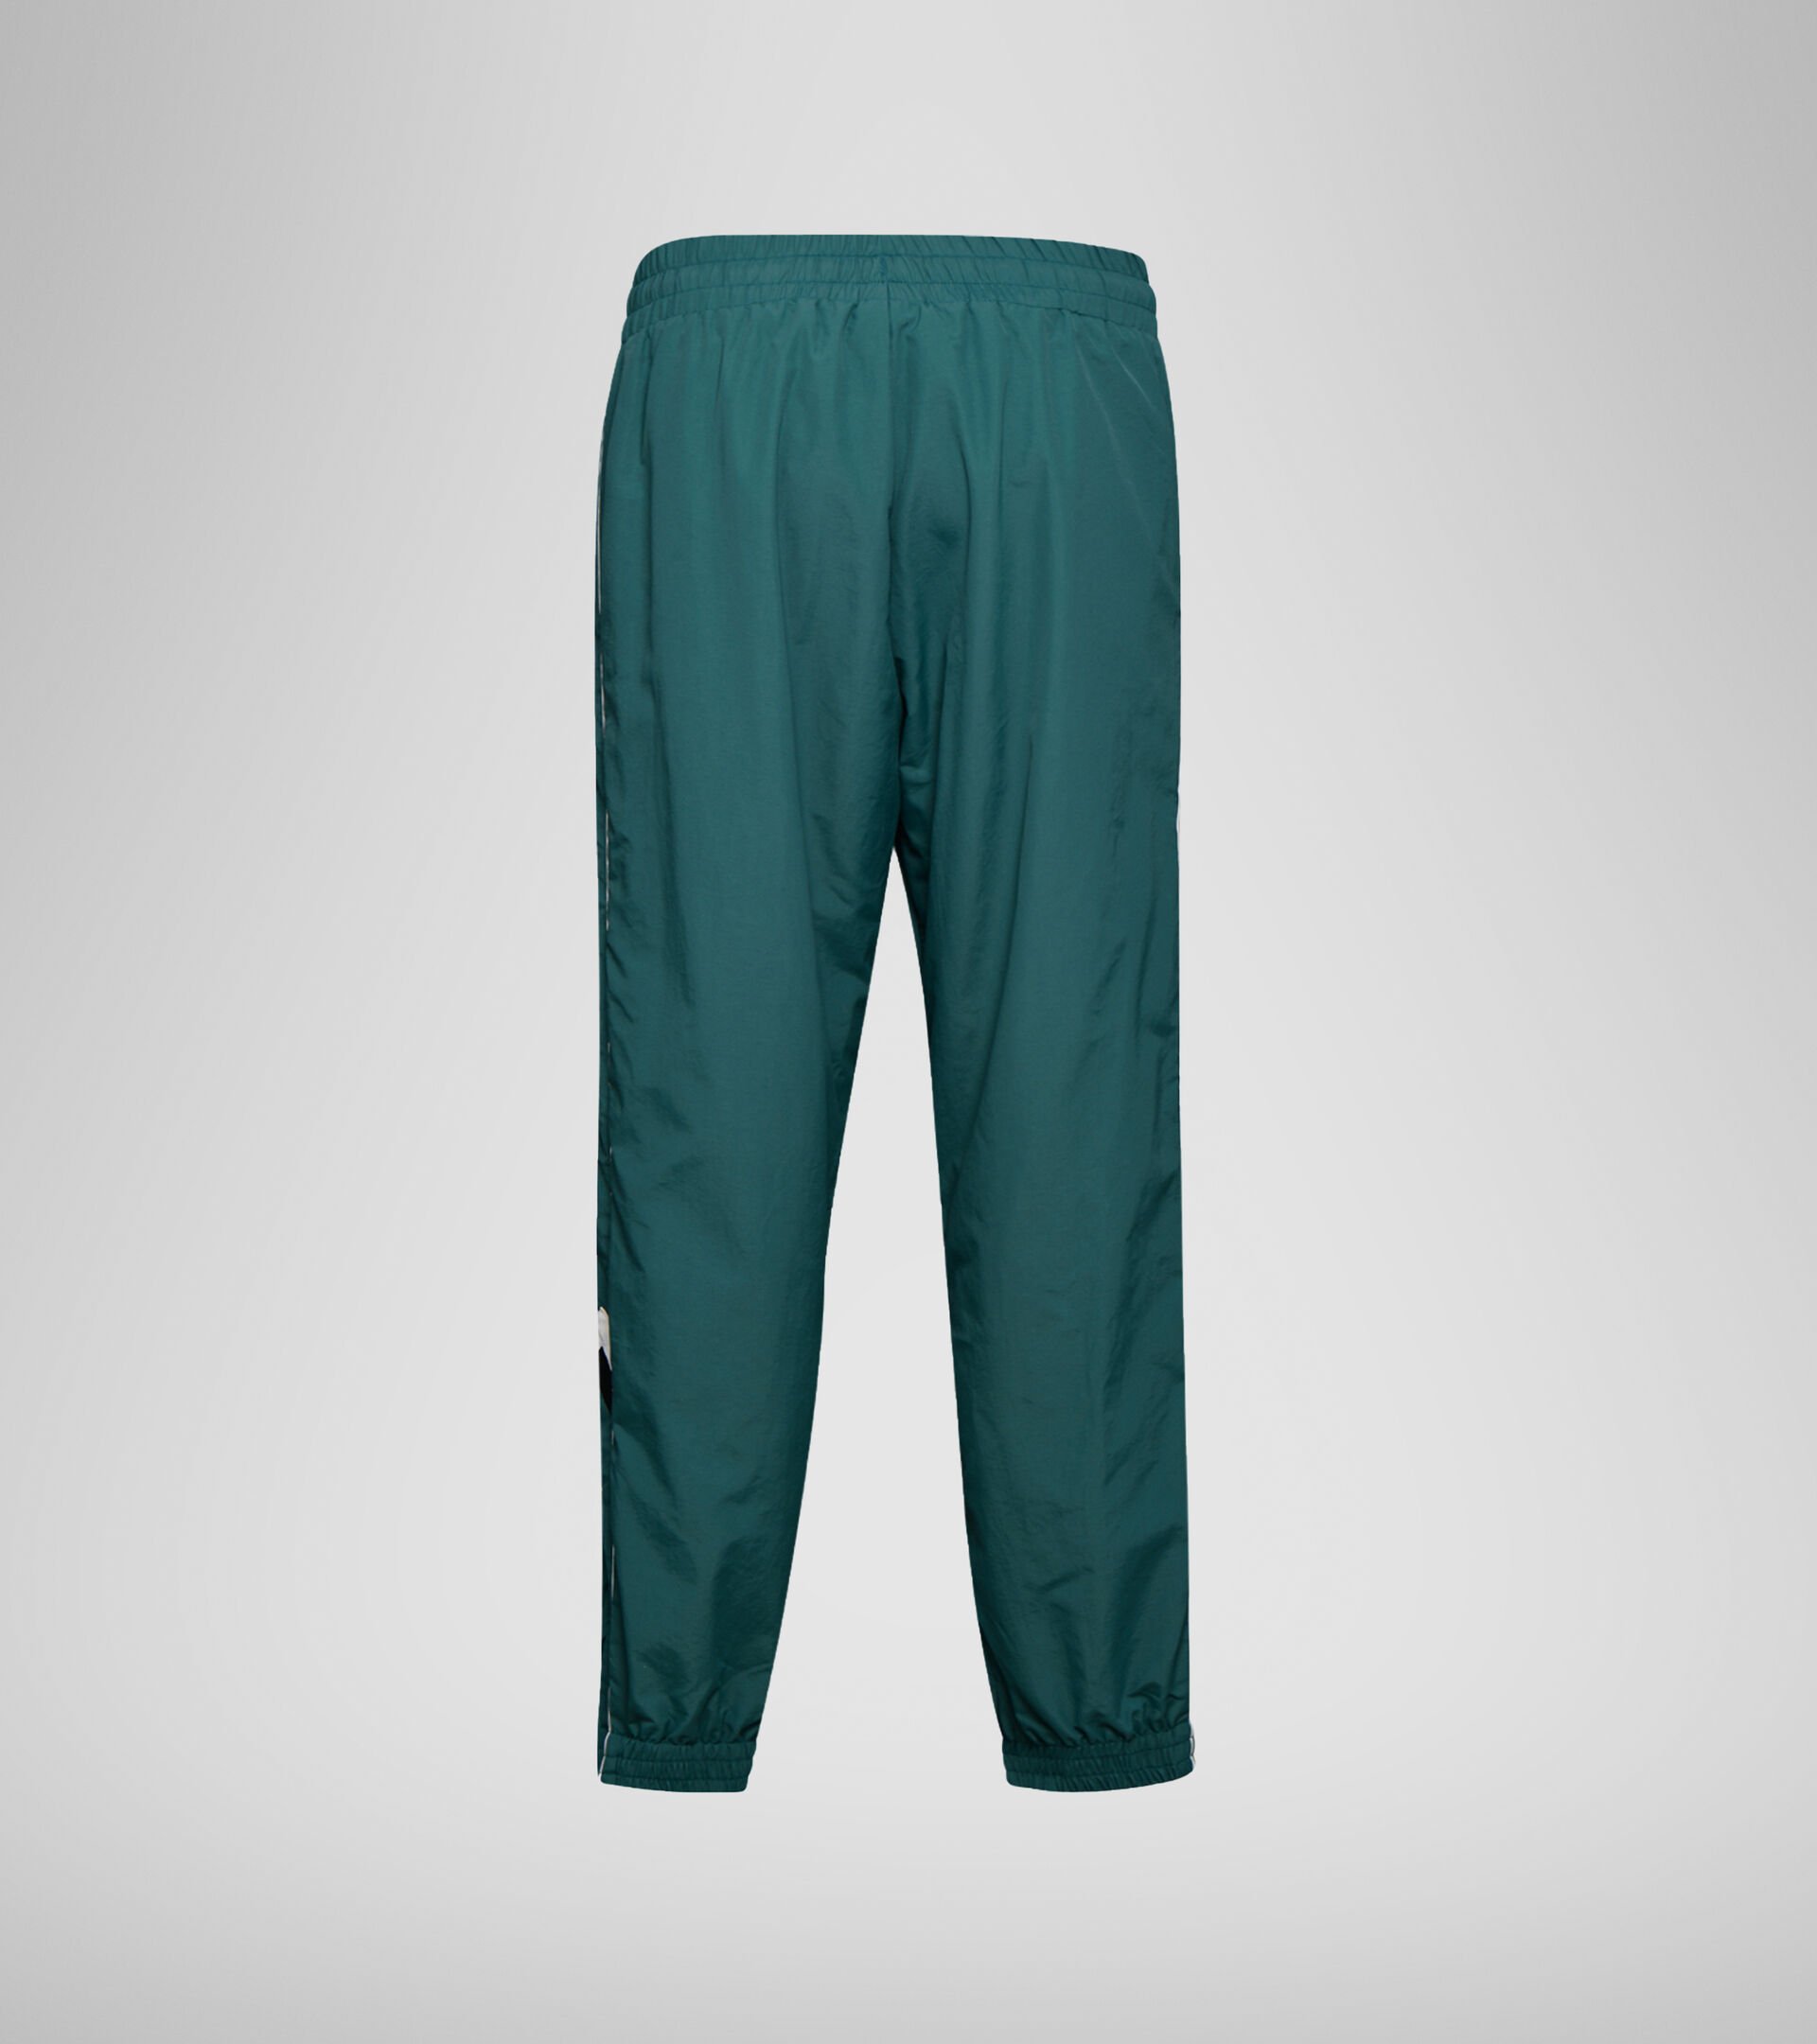 Pantalones deportivos - Unisex TRACK PANT ATLETICO HIEDRA - Diadora